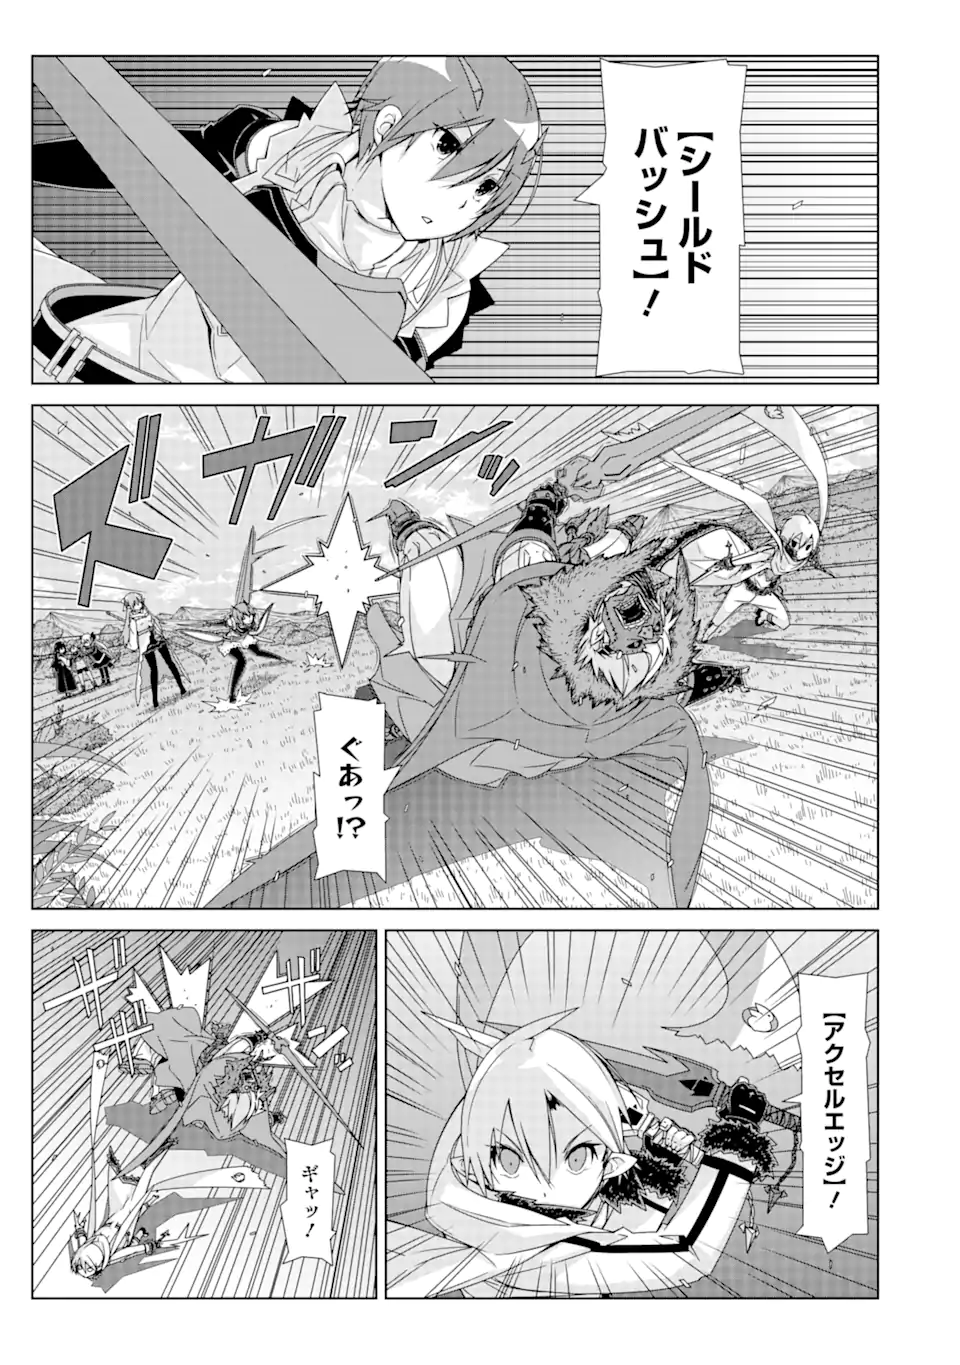 VRMMO wa Usagi Muffler to Tomoni - Chapter 18.2 - Page 2